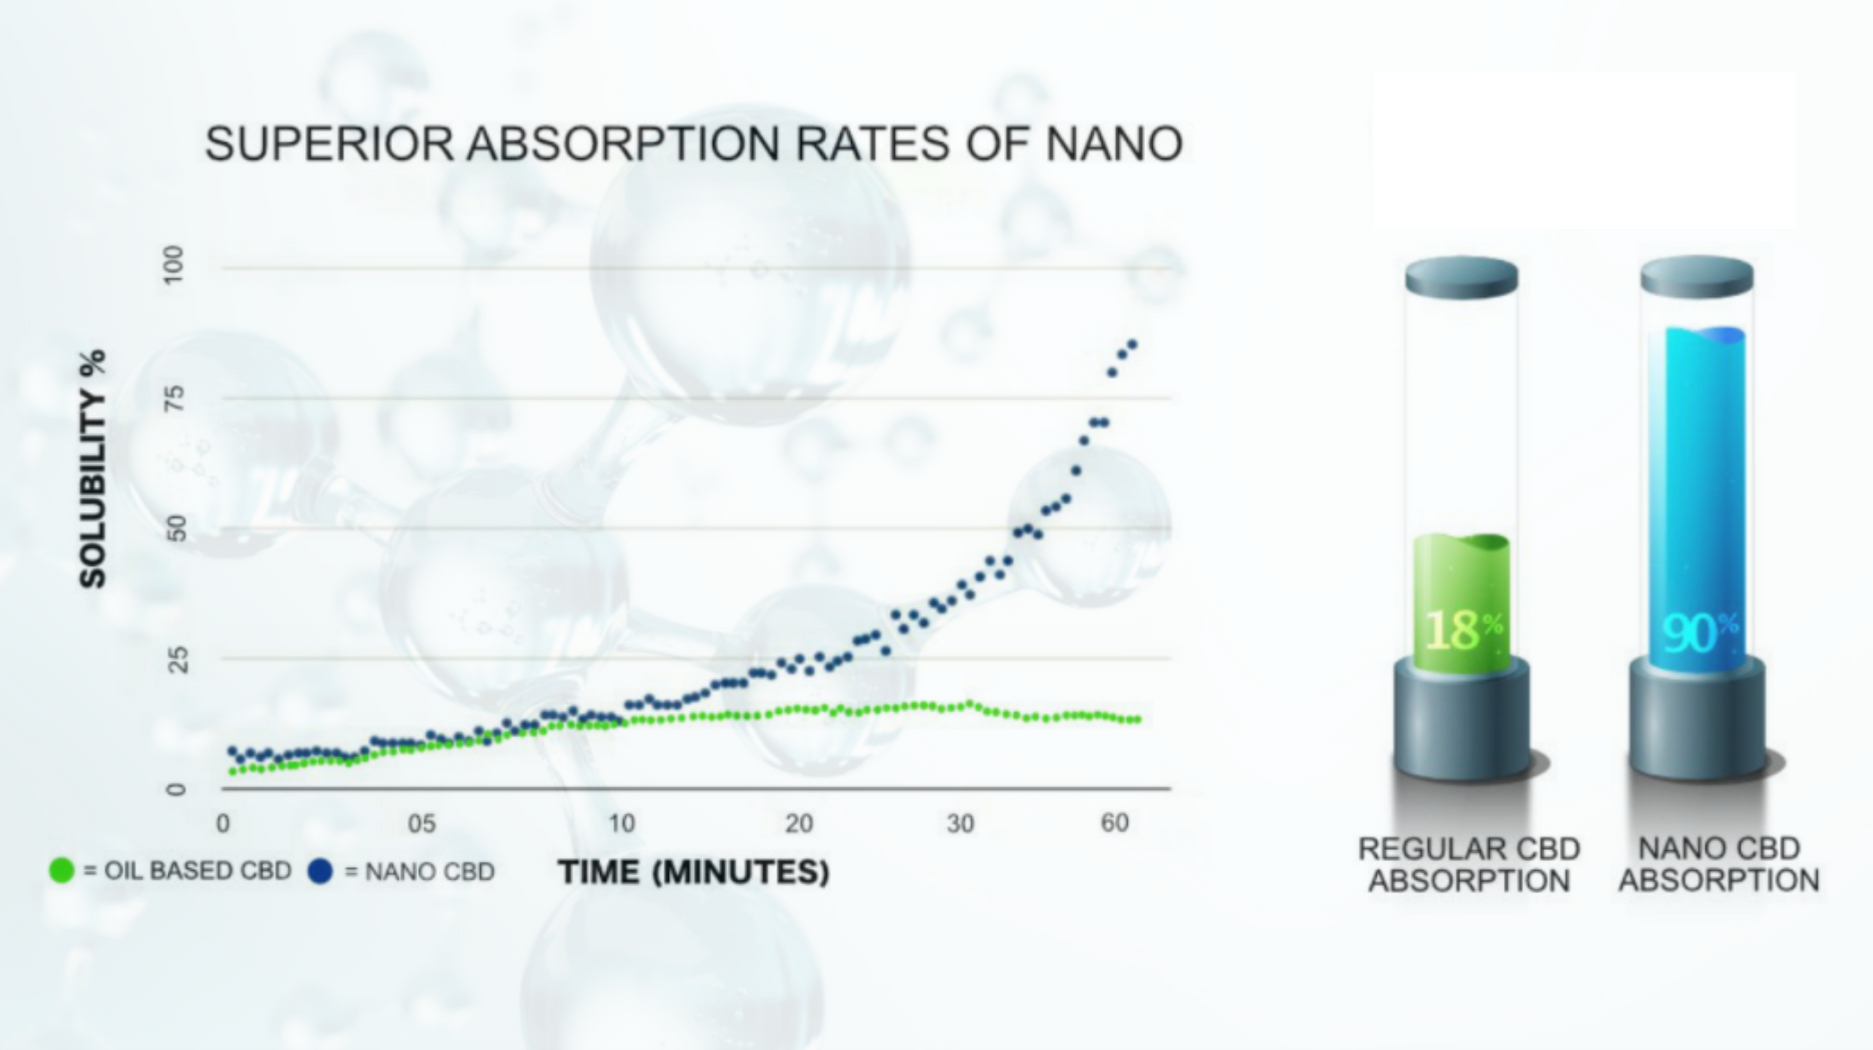 nanoabsorptiongraphic2.png